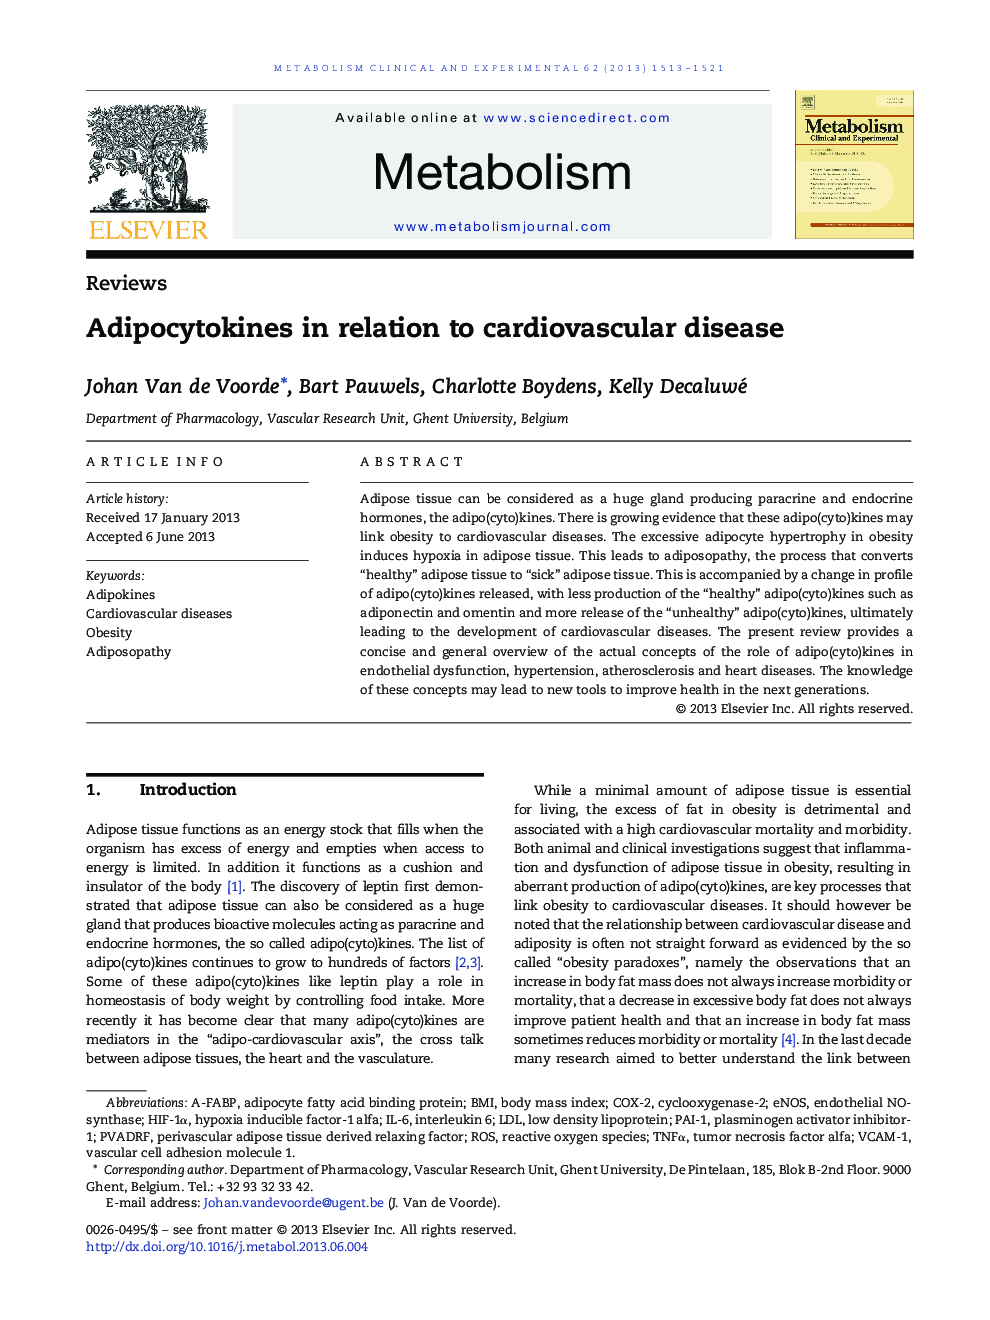 Adipocytokines in relation to cardiovascular disease